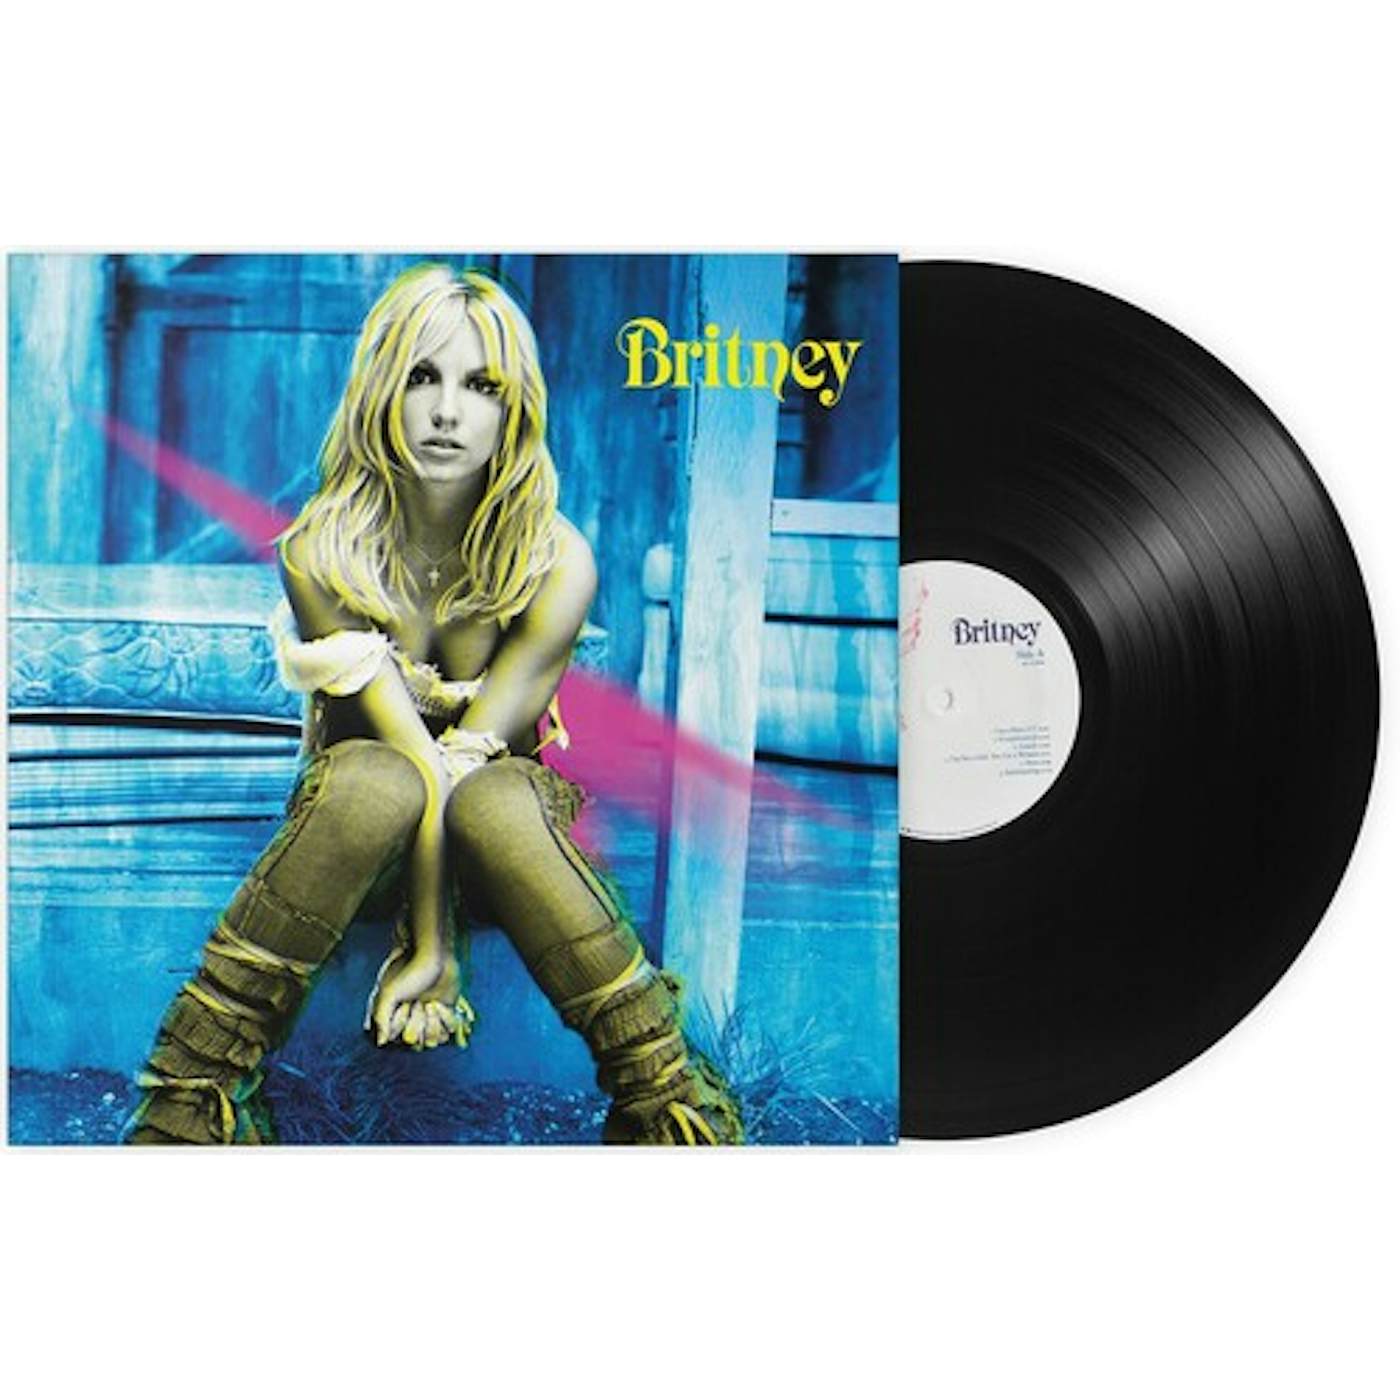 Britney Spears Britney Vinyl Record